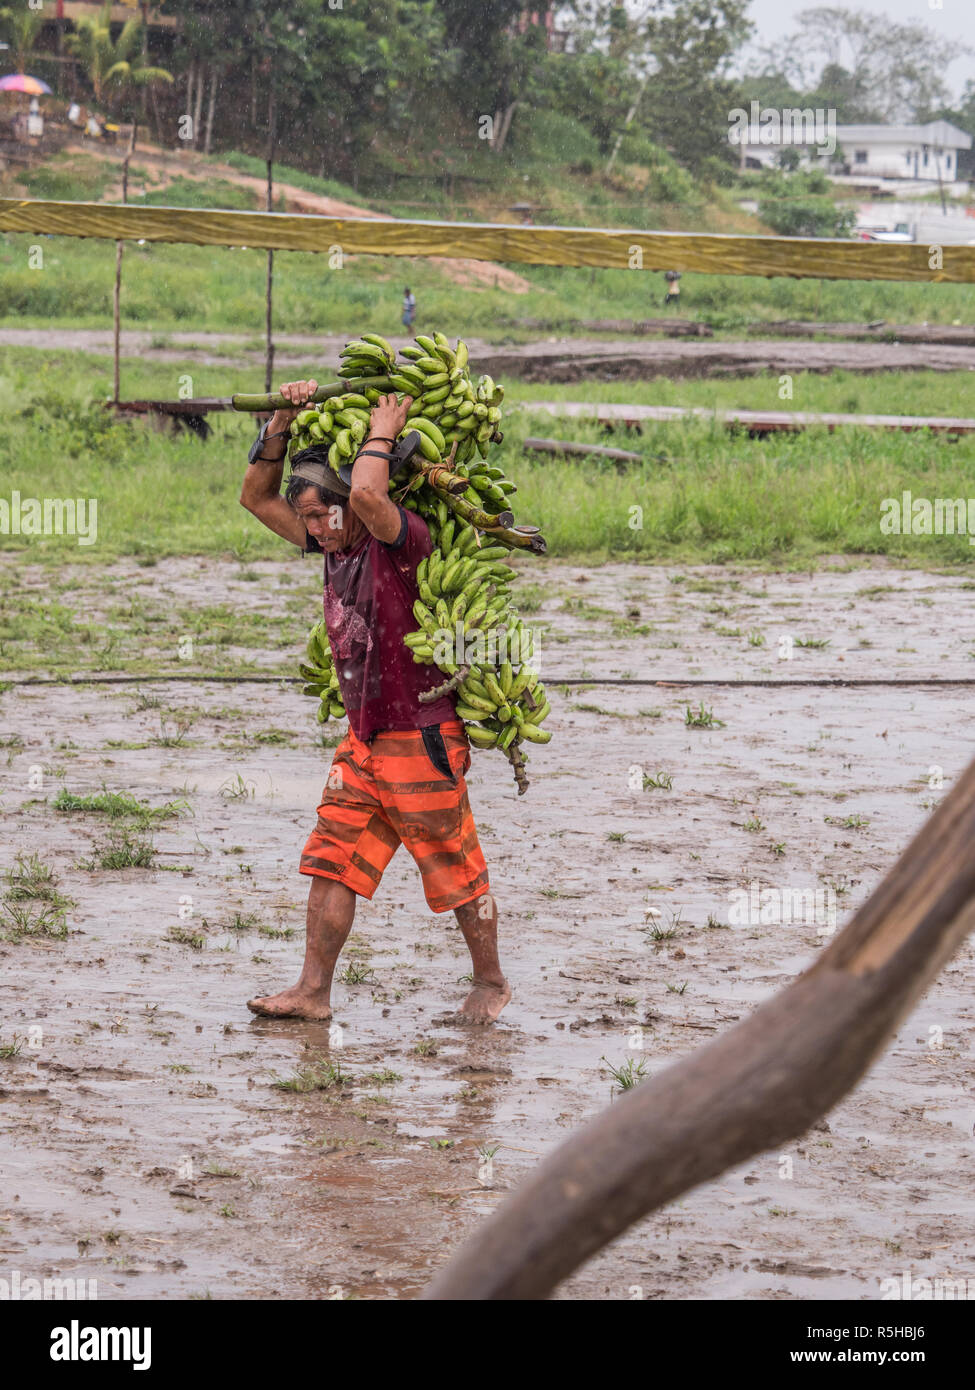 Tabatinga, Brazil - September 15, 2018: Man with the bananas during a rainy day at the port of the Amazon. Tres Fronteras. Latin America. Amazonia. Stock Photo